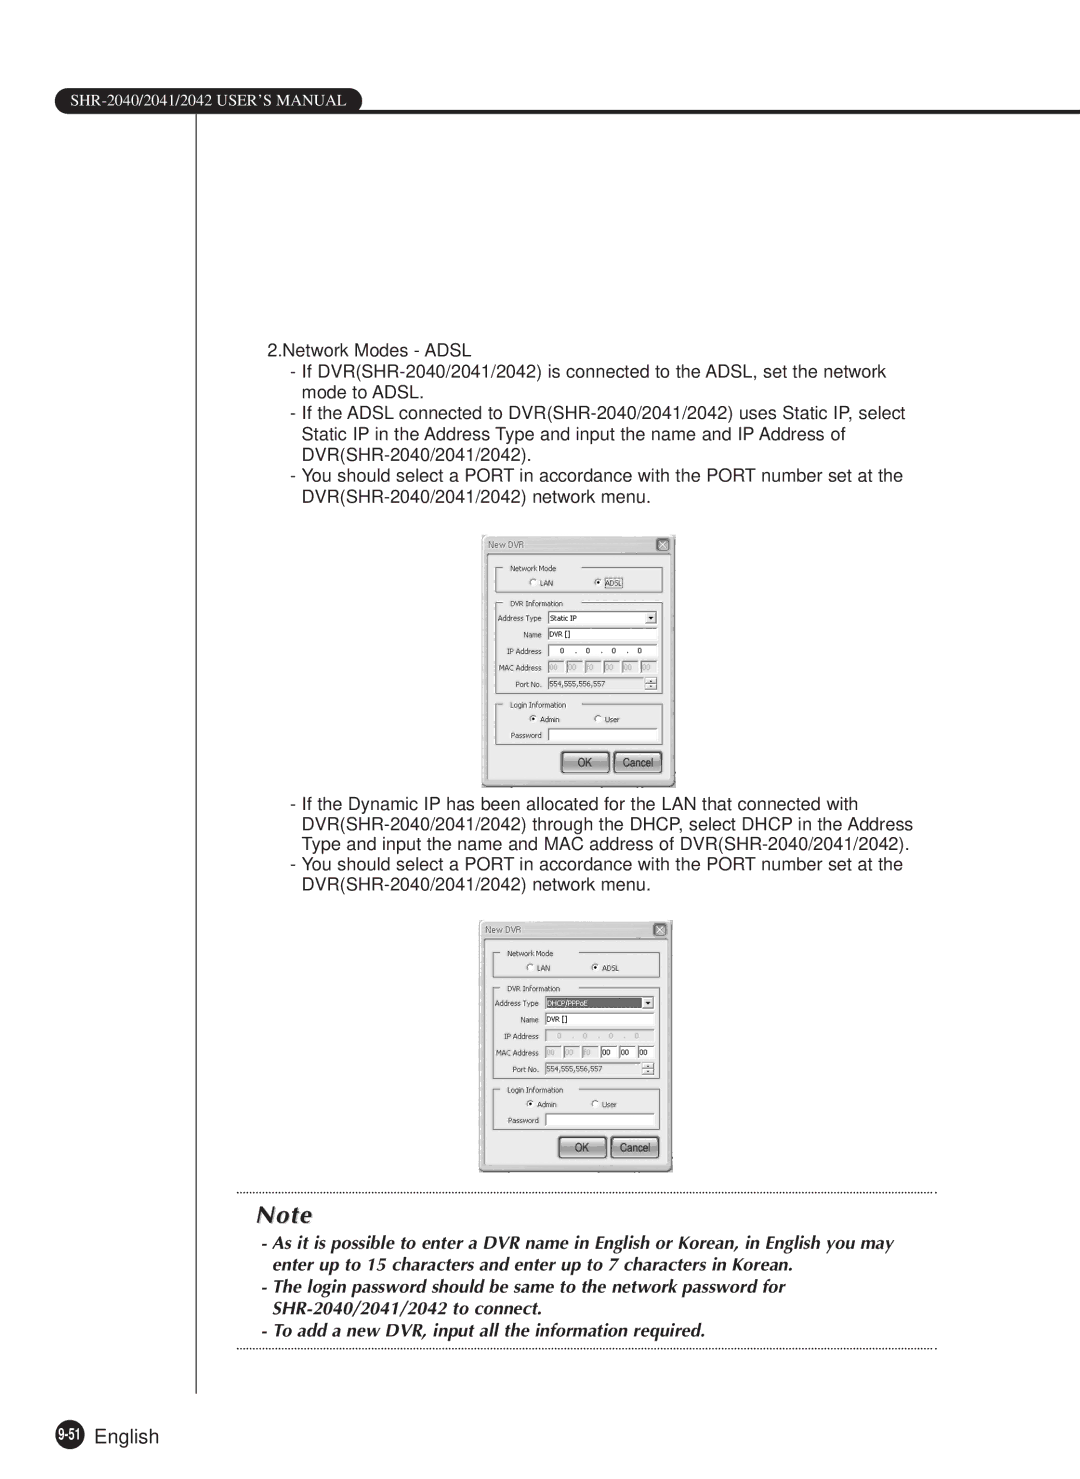 Samsung SHR-2040N, SHR-2040P manual 51English 